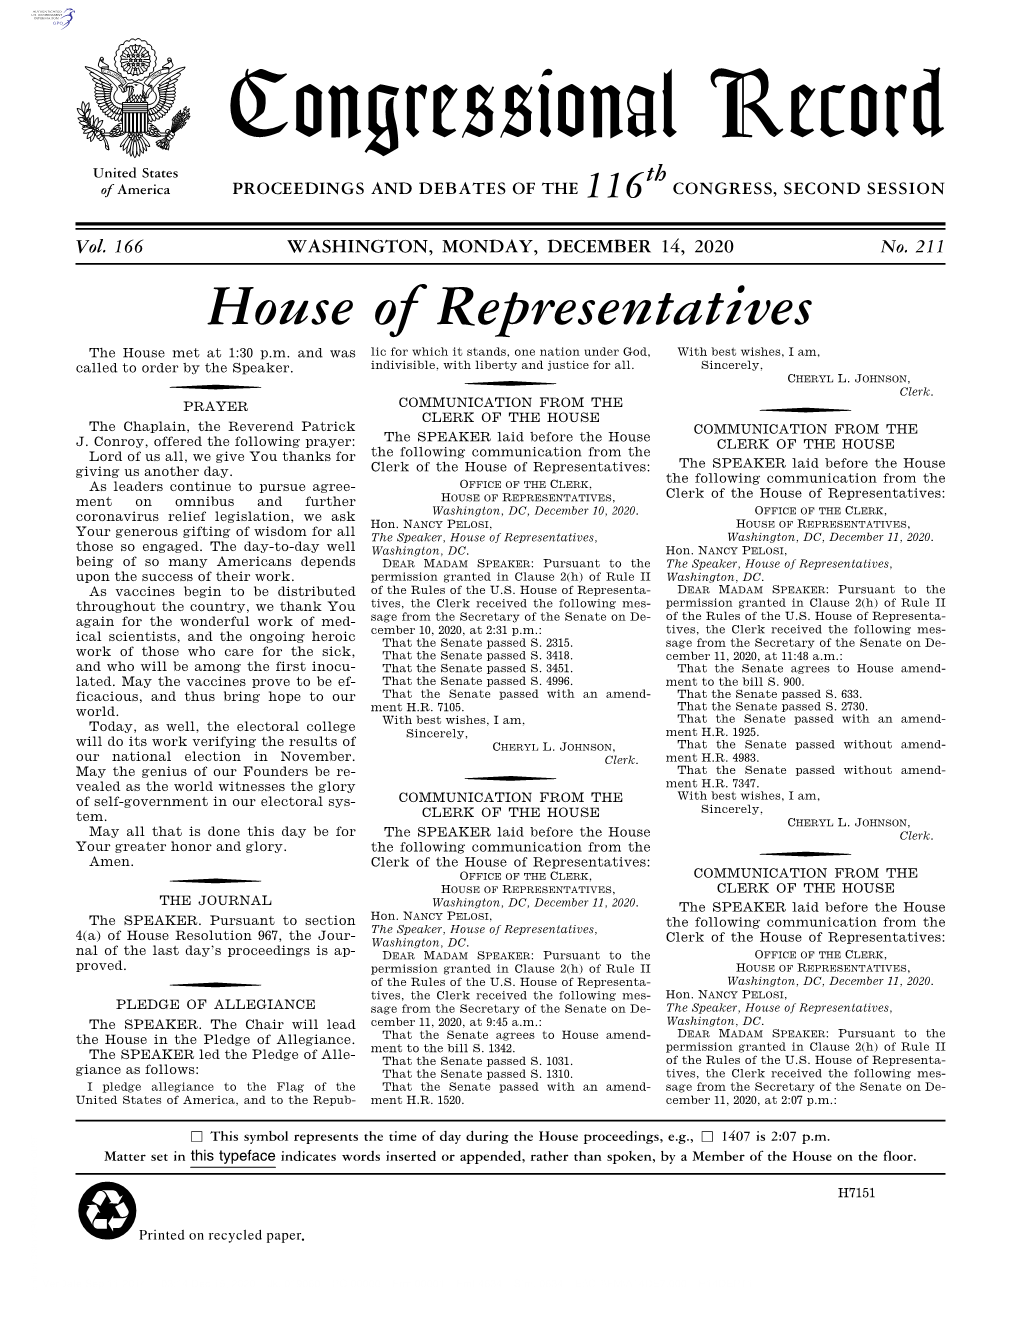 Senate on De- of the Rules of the U.S